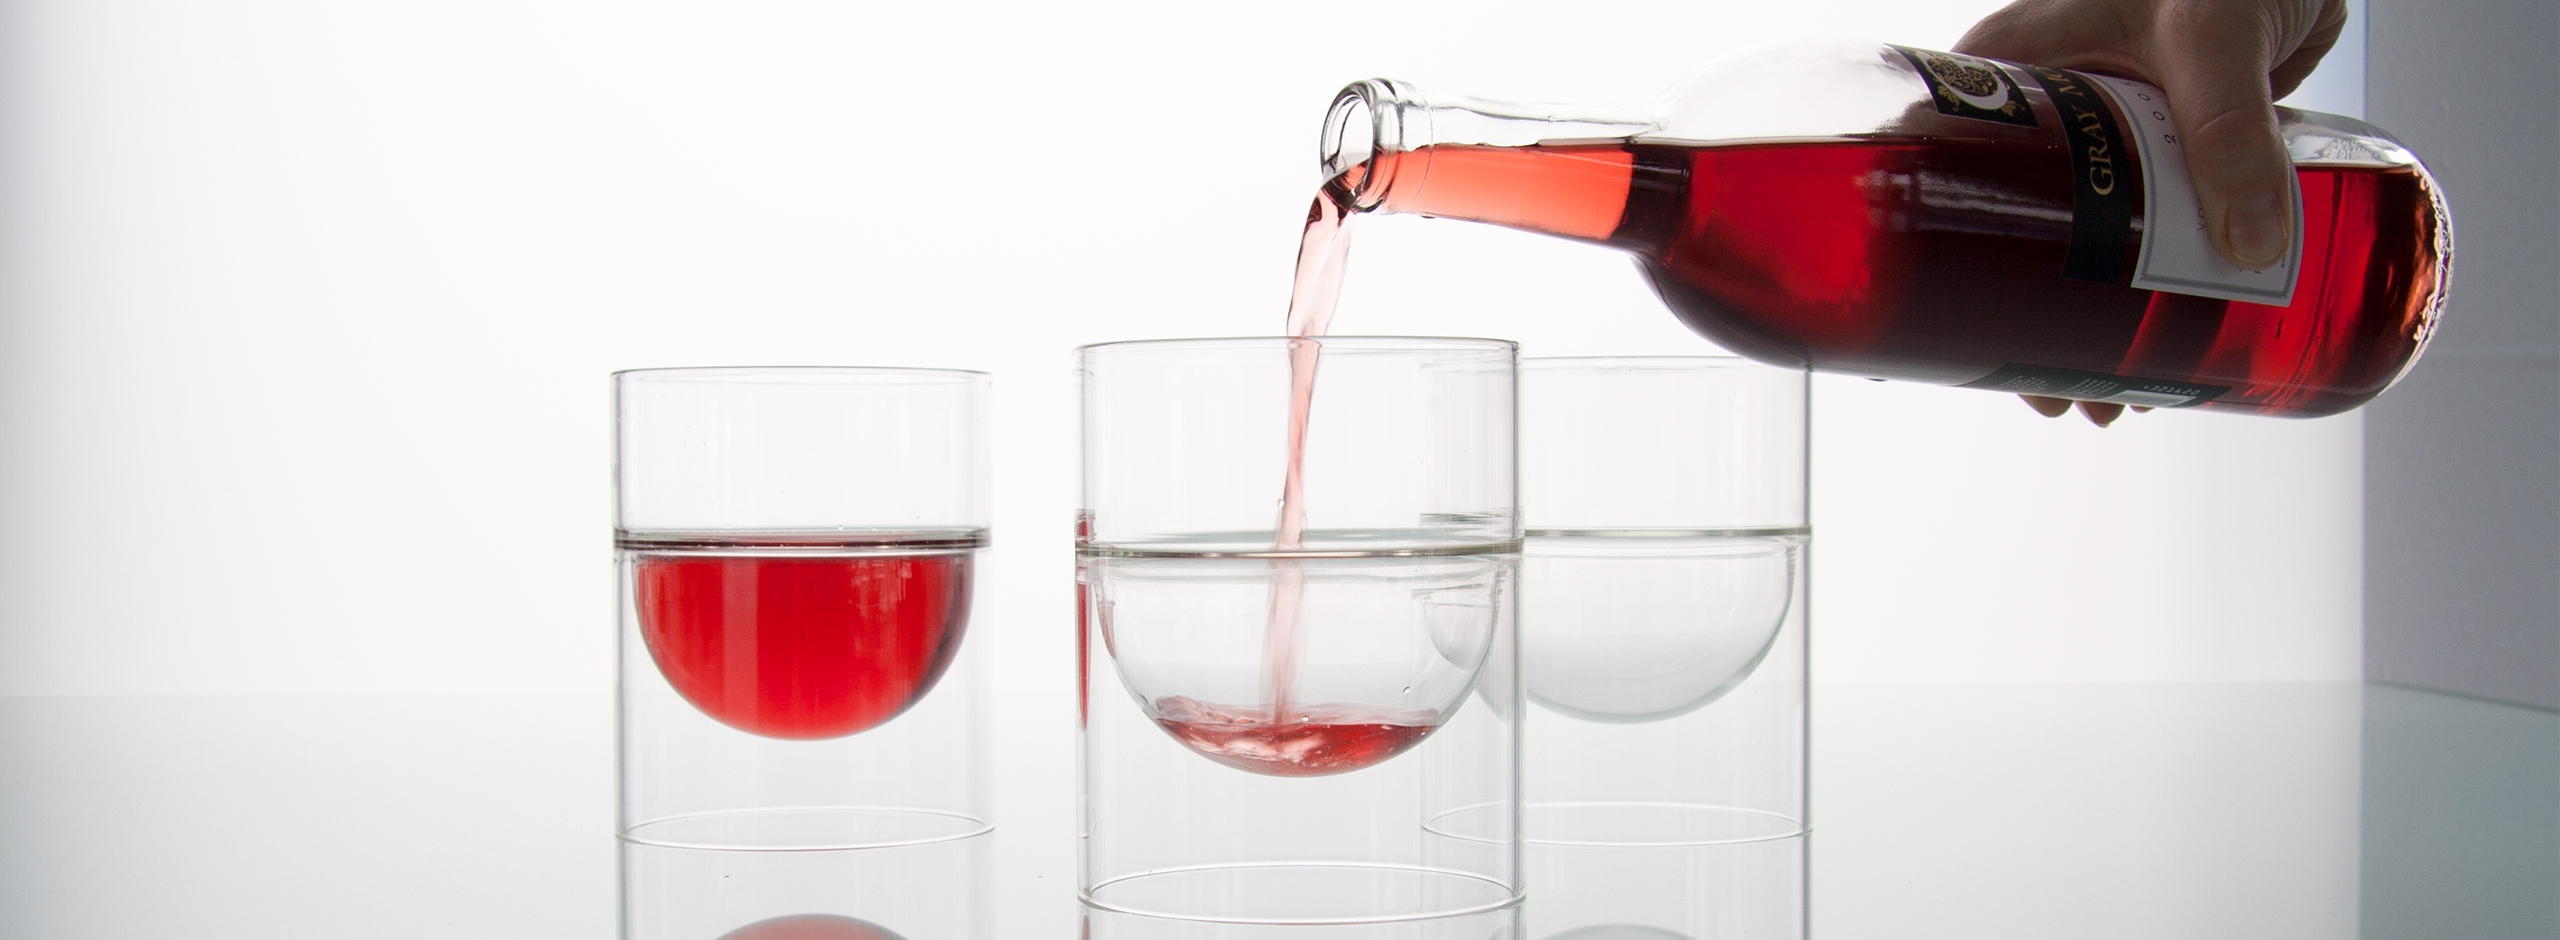 float glassware - barware - red wine glasses